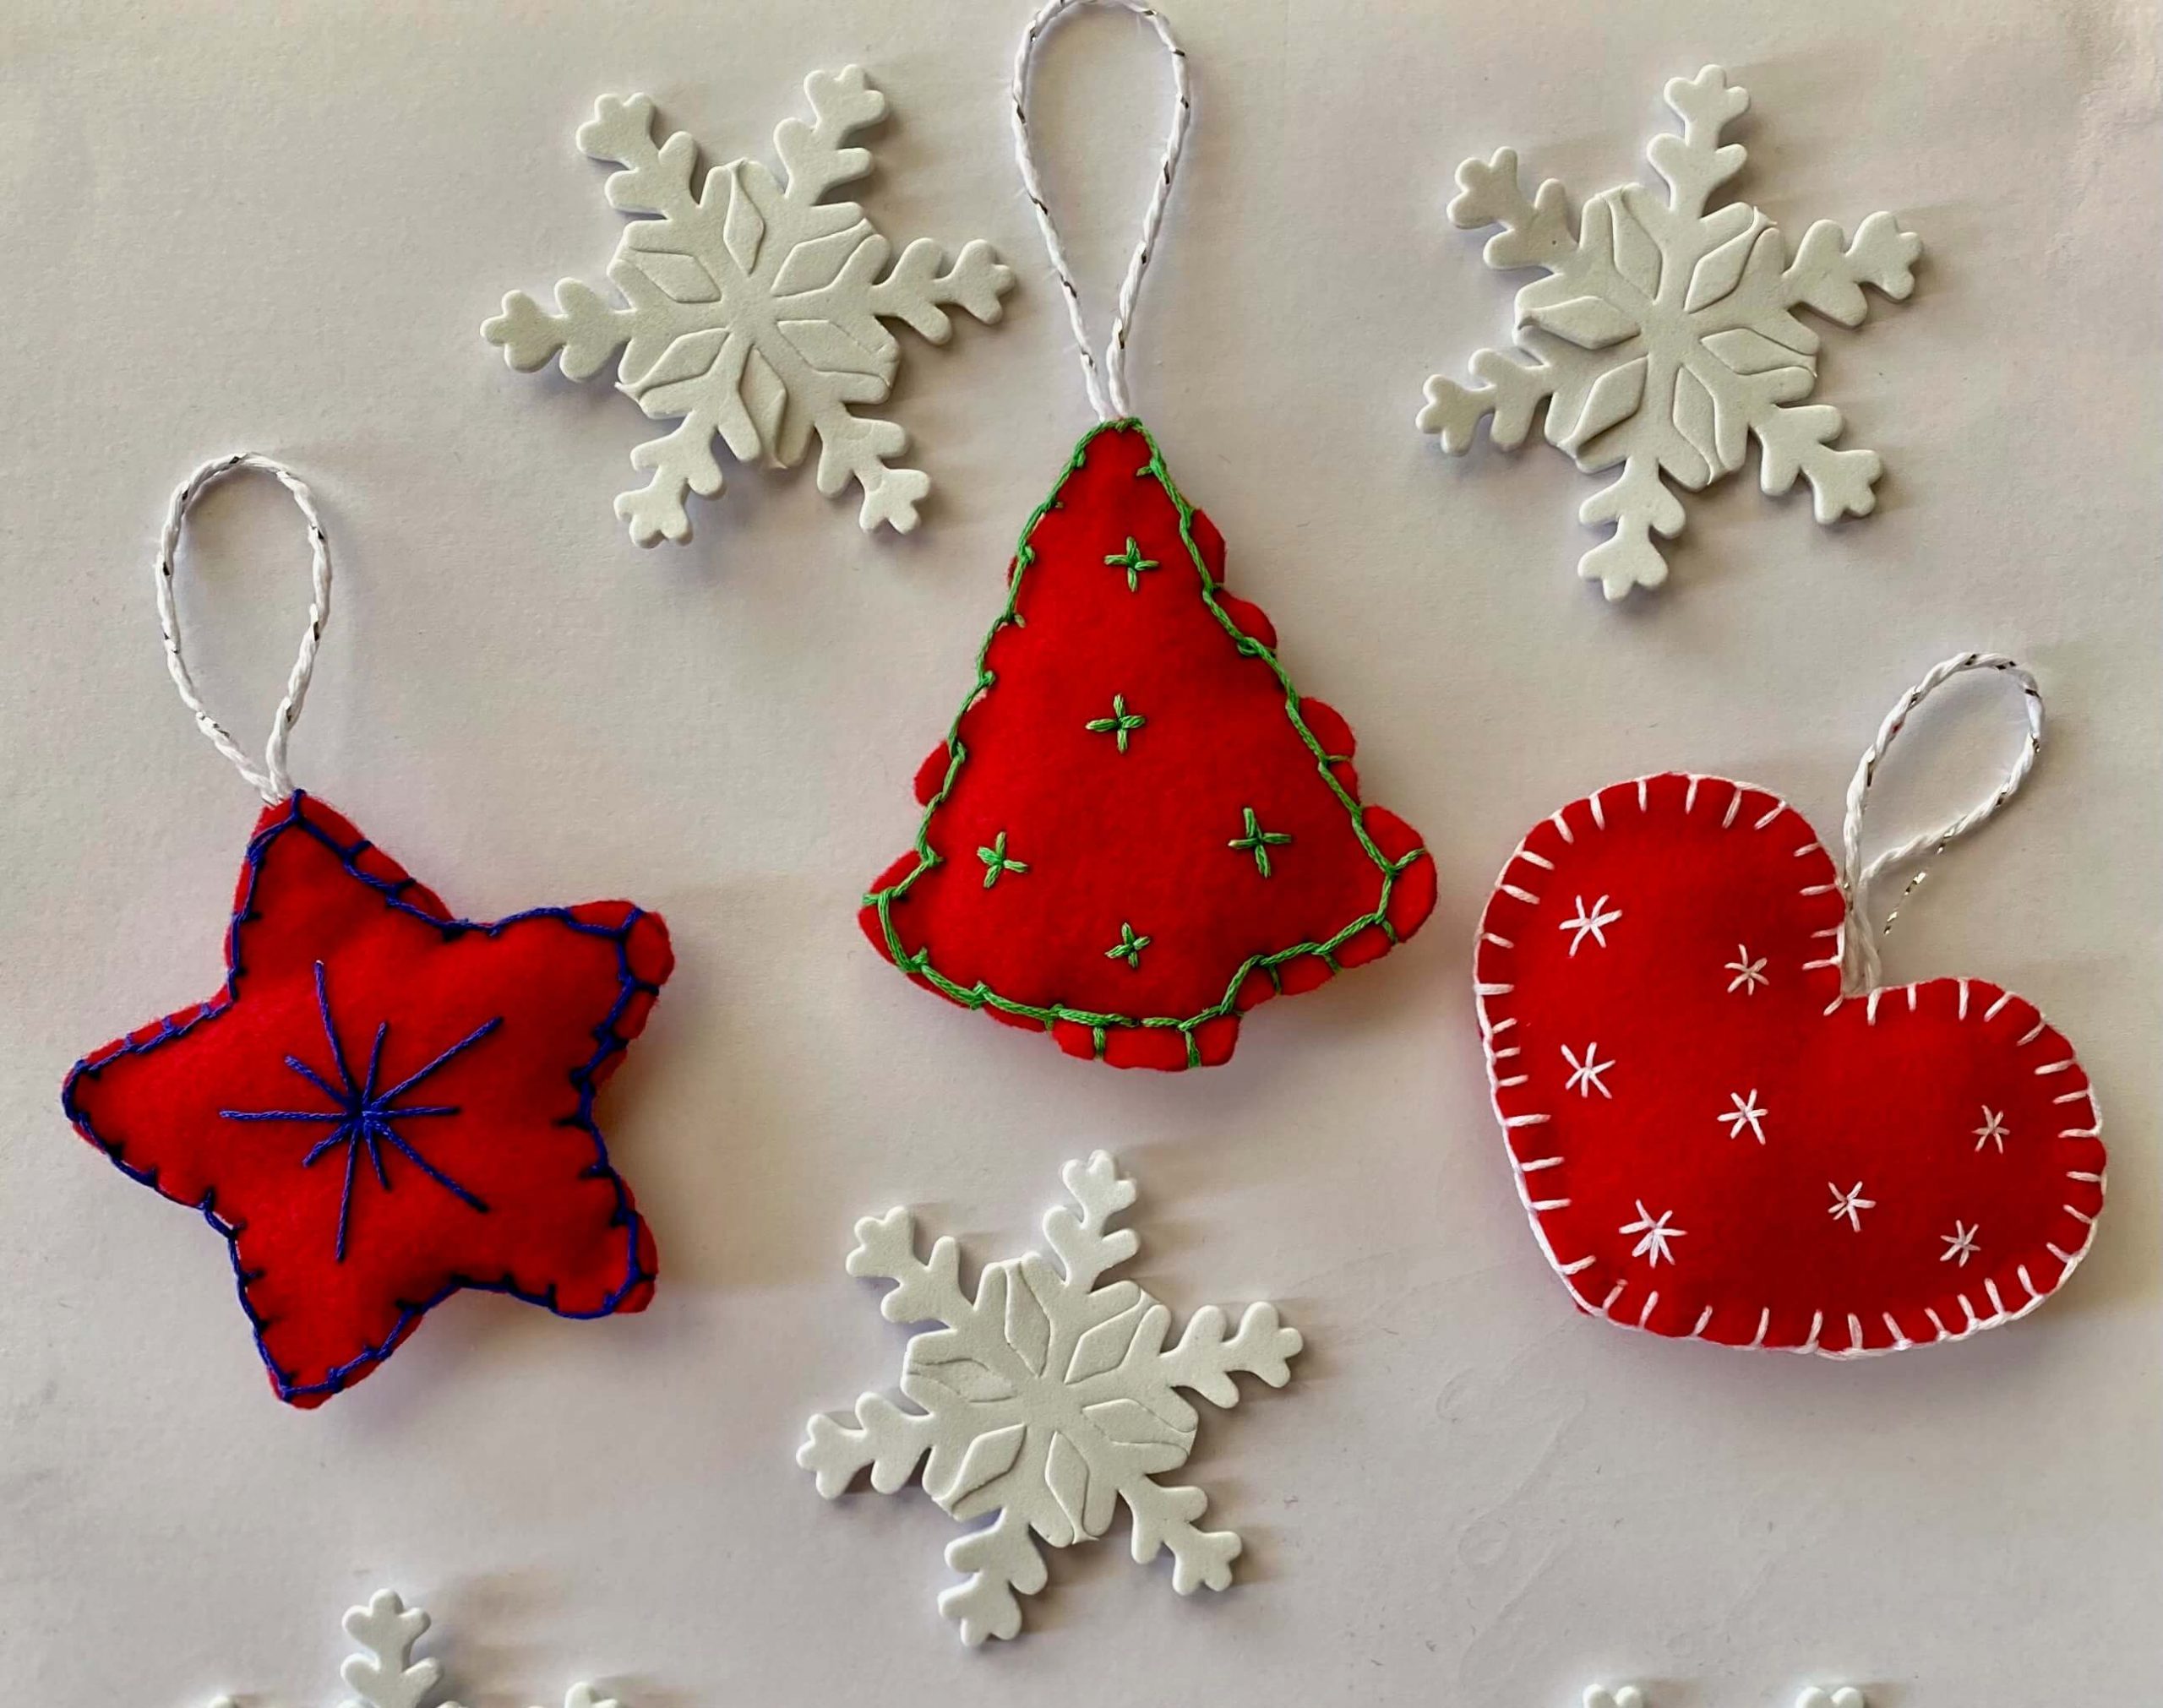 DIY Felt Christmas Ornaments - Love to stay home